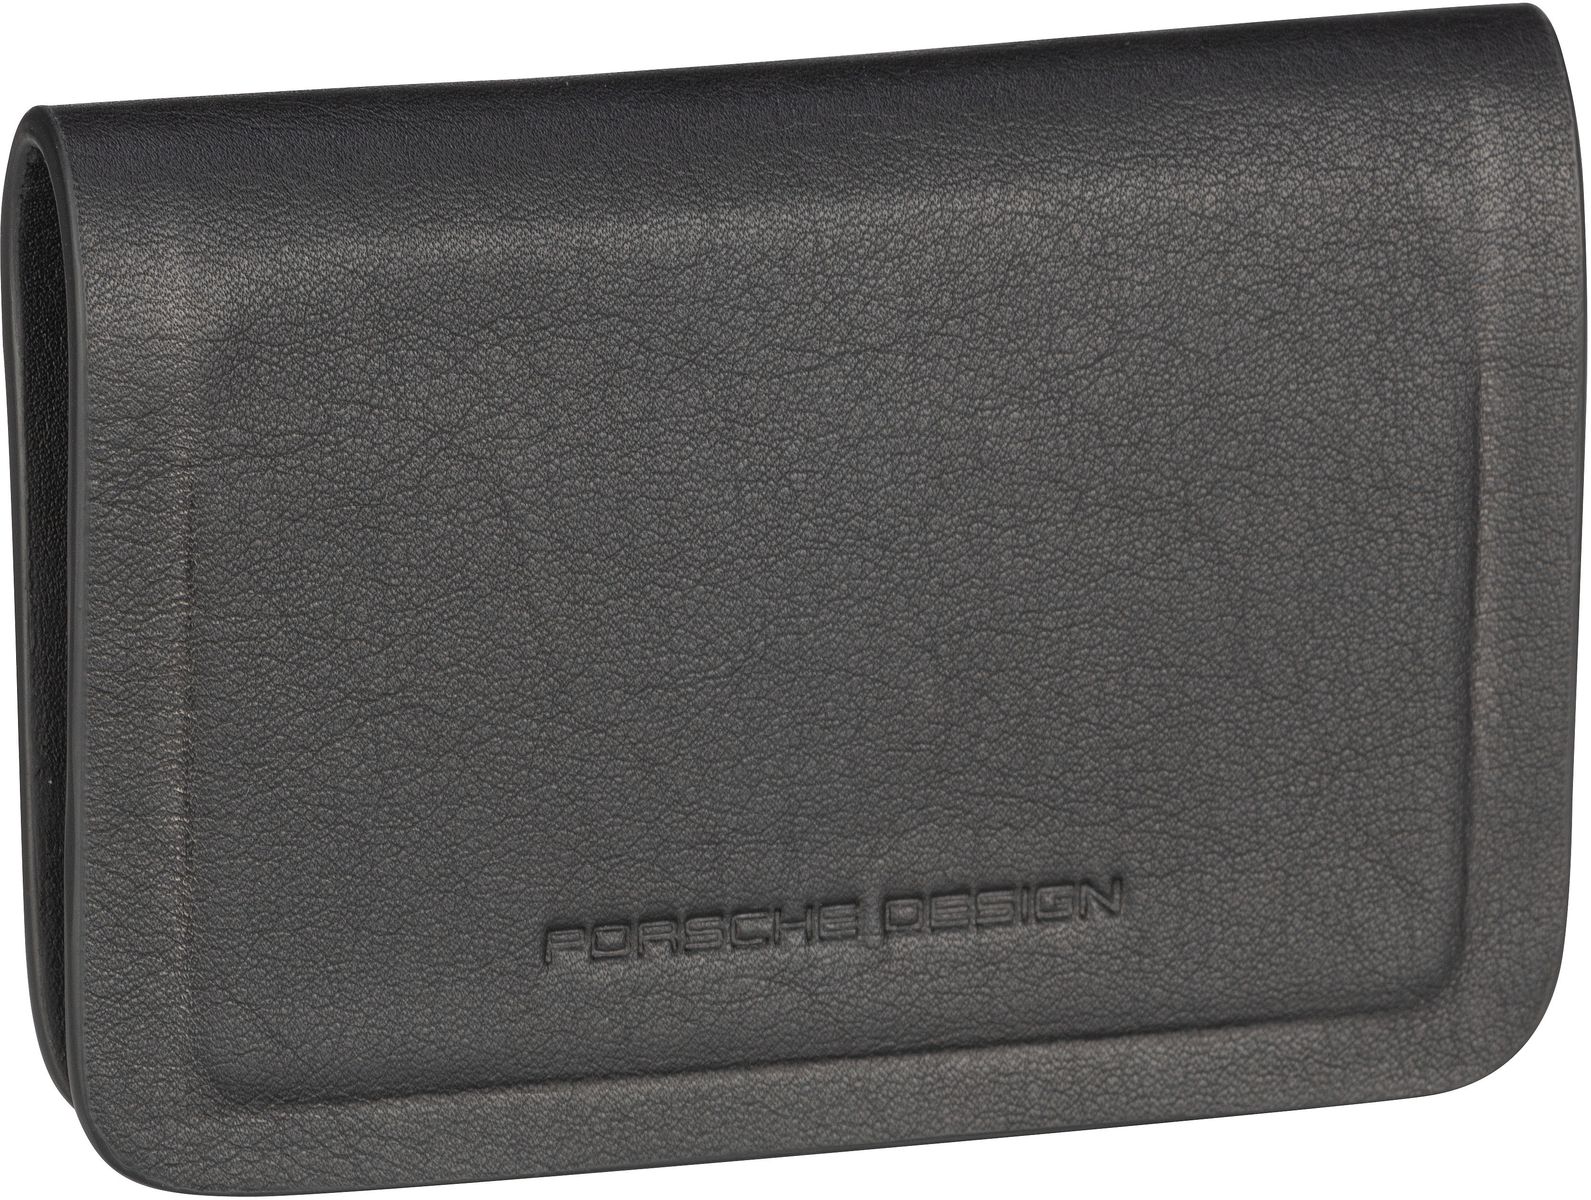 Porsche Design Seamless Card Holder - Black